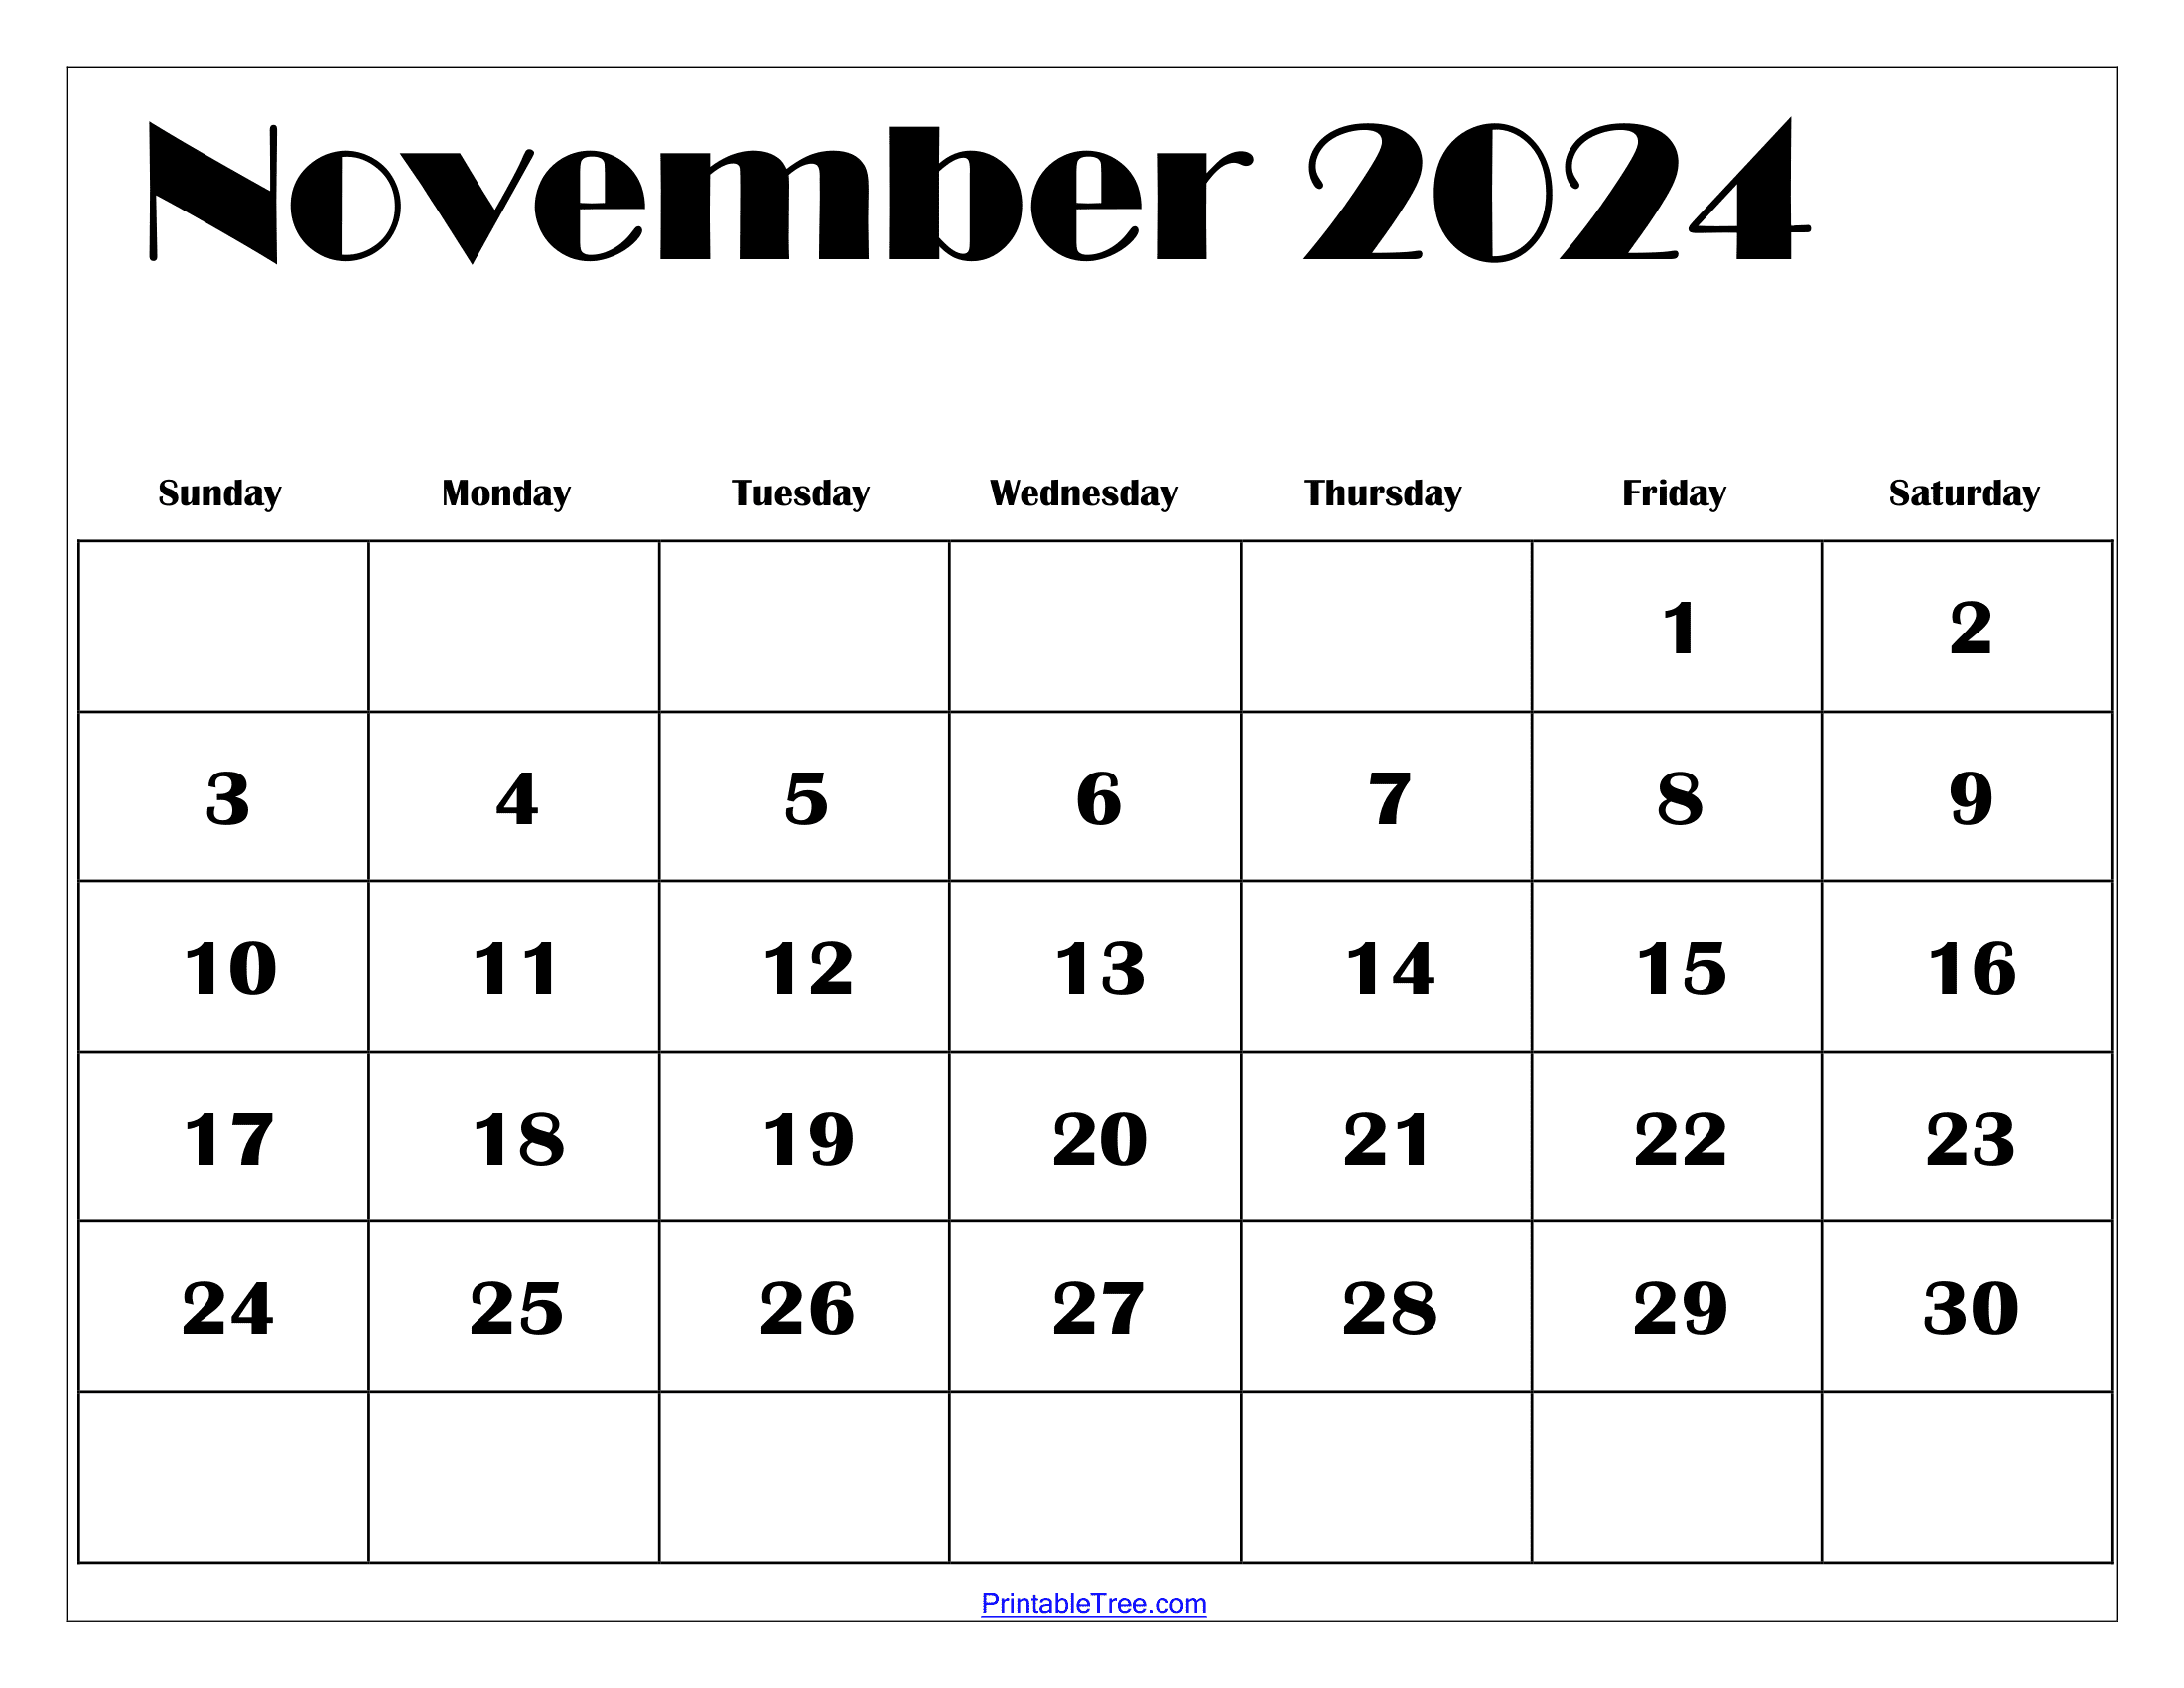 November 2024 Calendar Printable Pdf Template With Holidays for 2024 November Calendar Printable